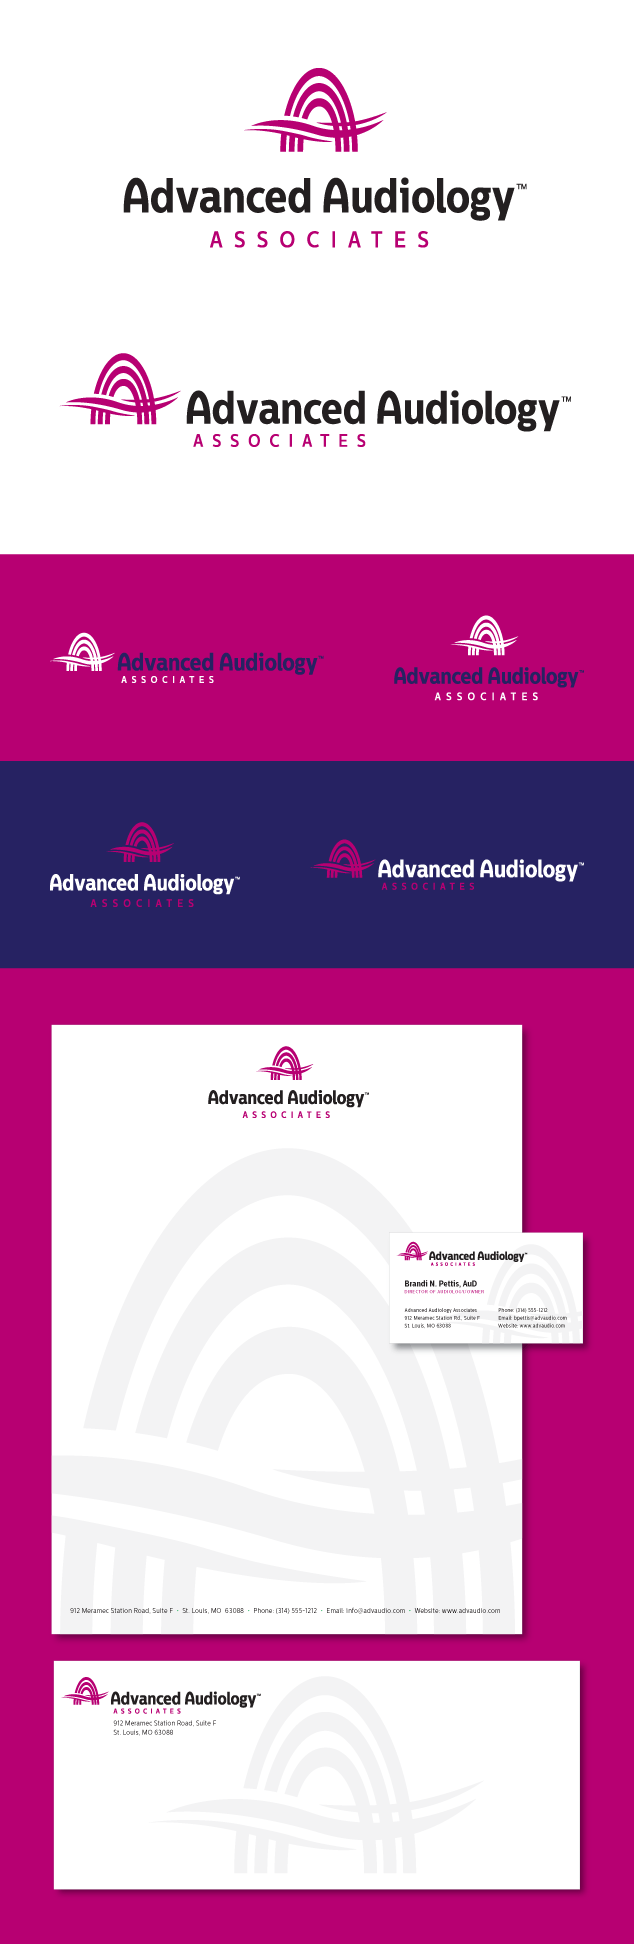 Advanced Audiology St. Louis logo branding